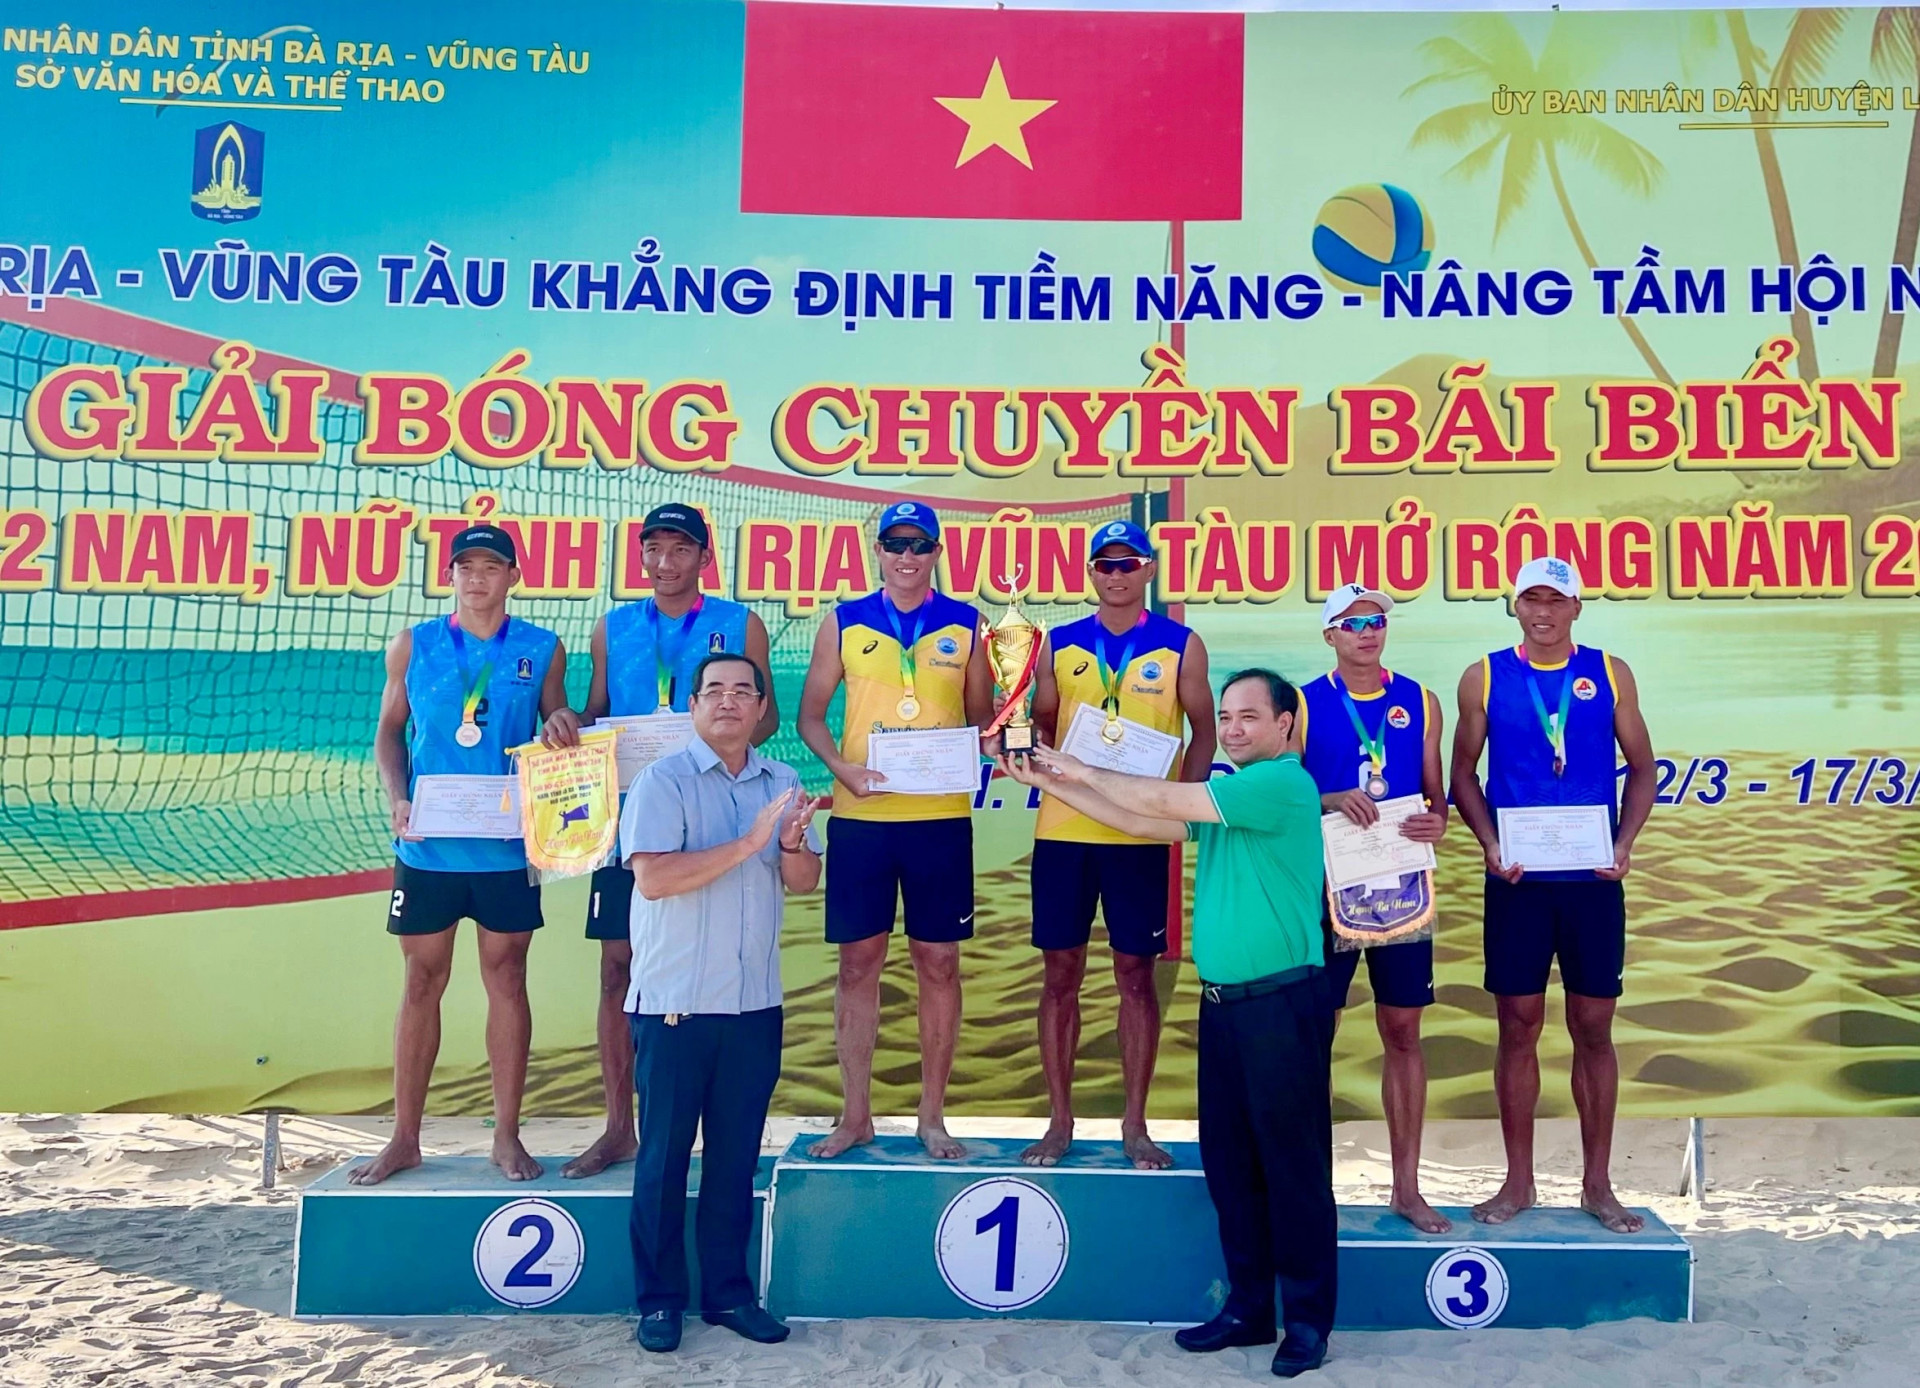 Sanvinest Khanh Hoa male athletes win gold medal

